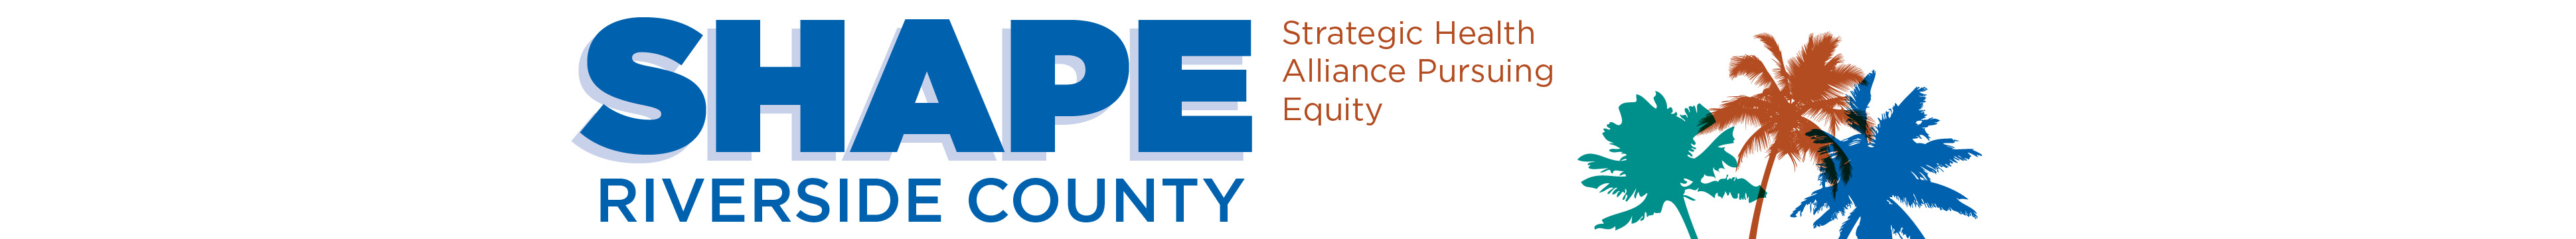 Shape Riverside County - Strategic Health Alliance Pursuing Equity